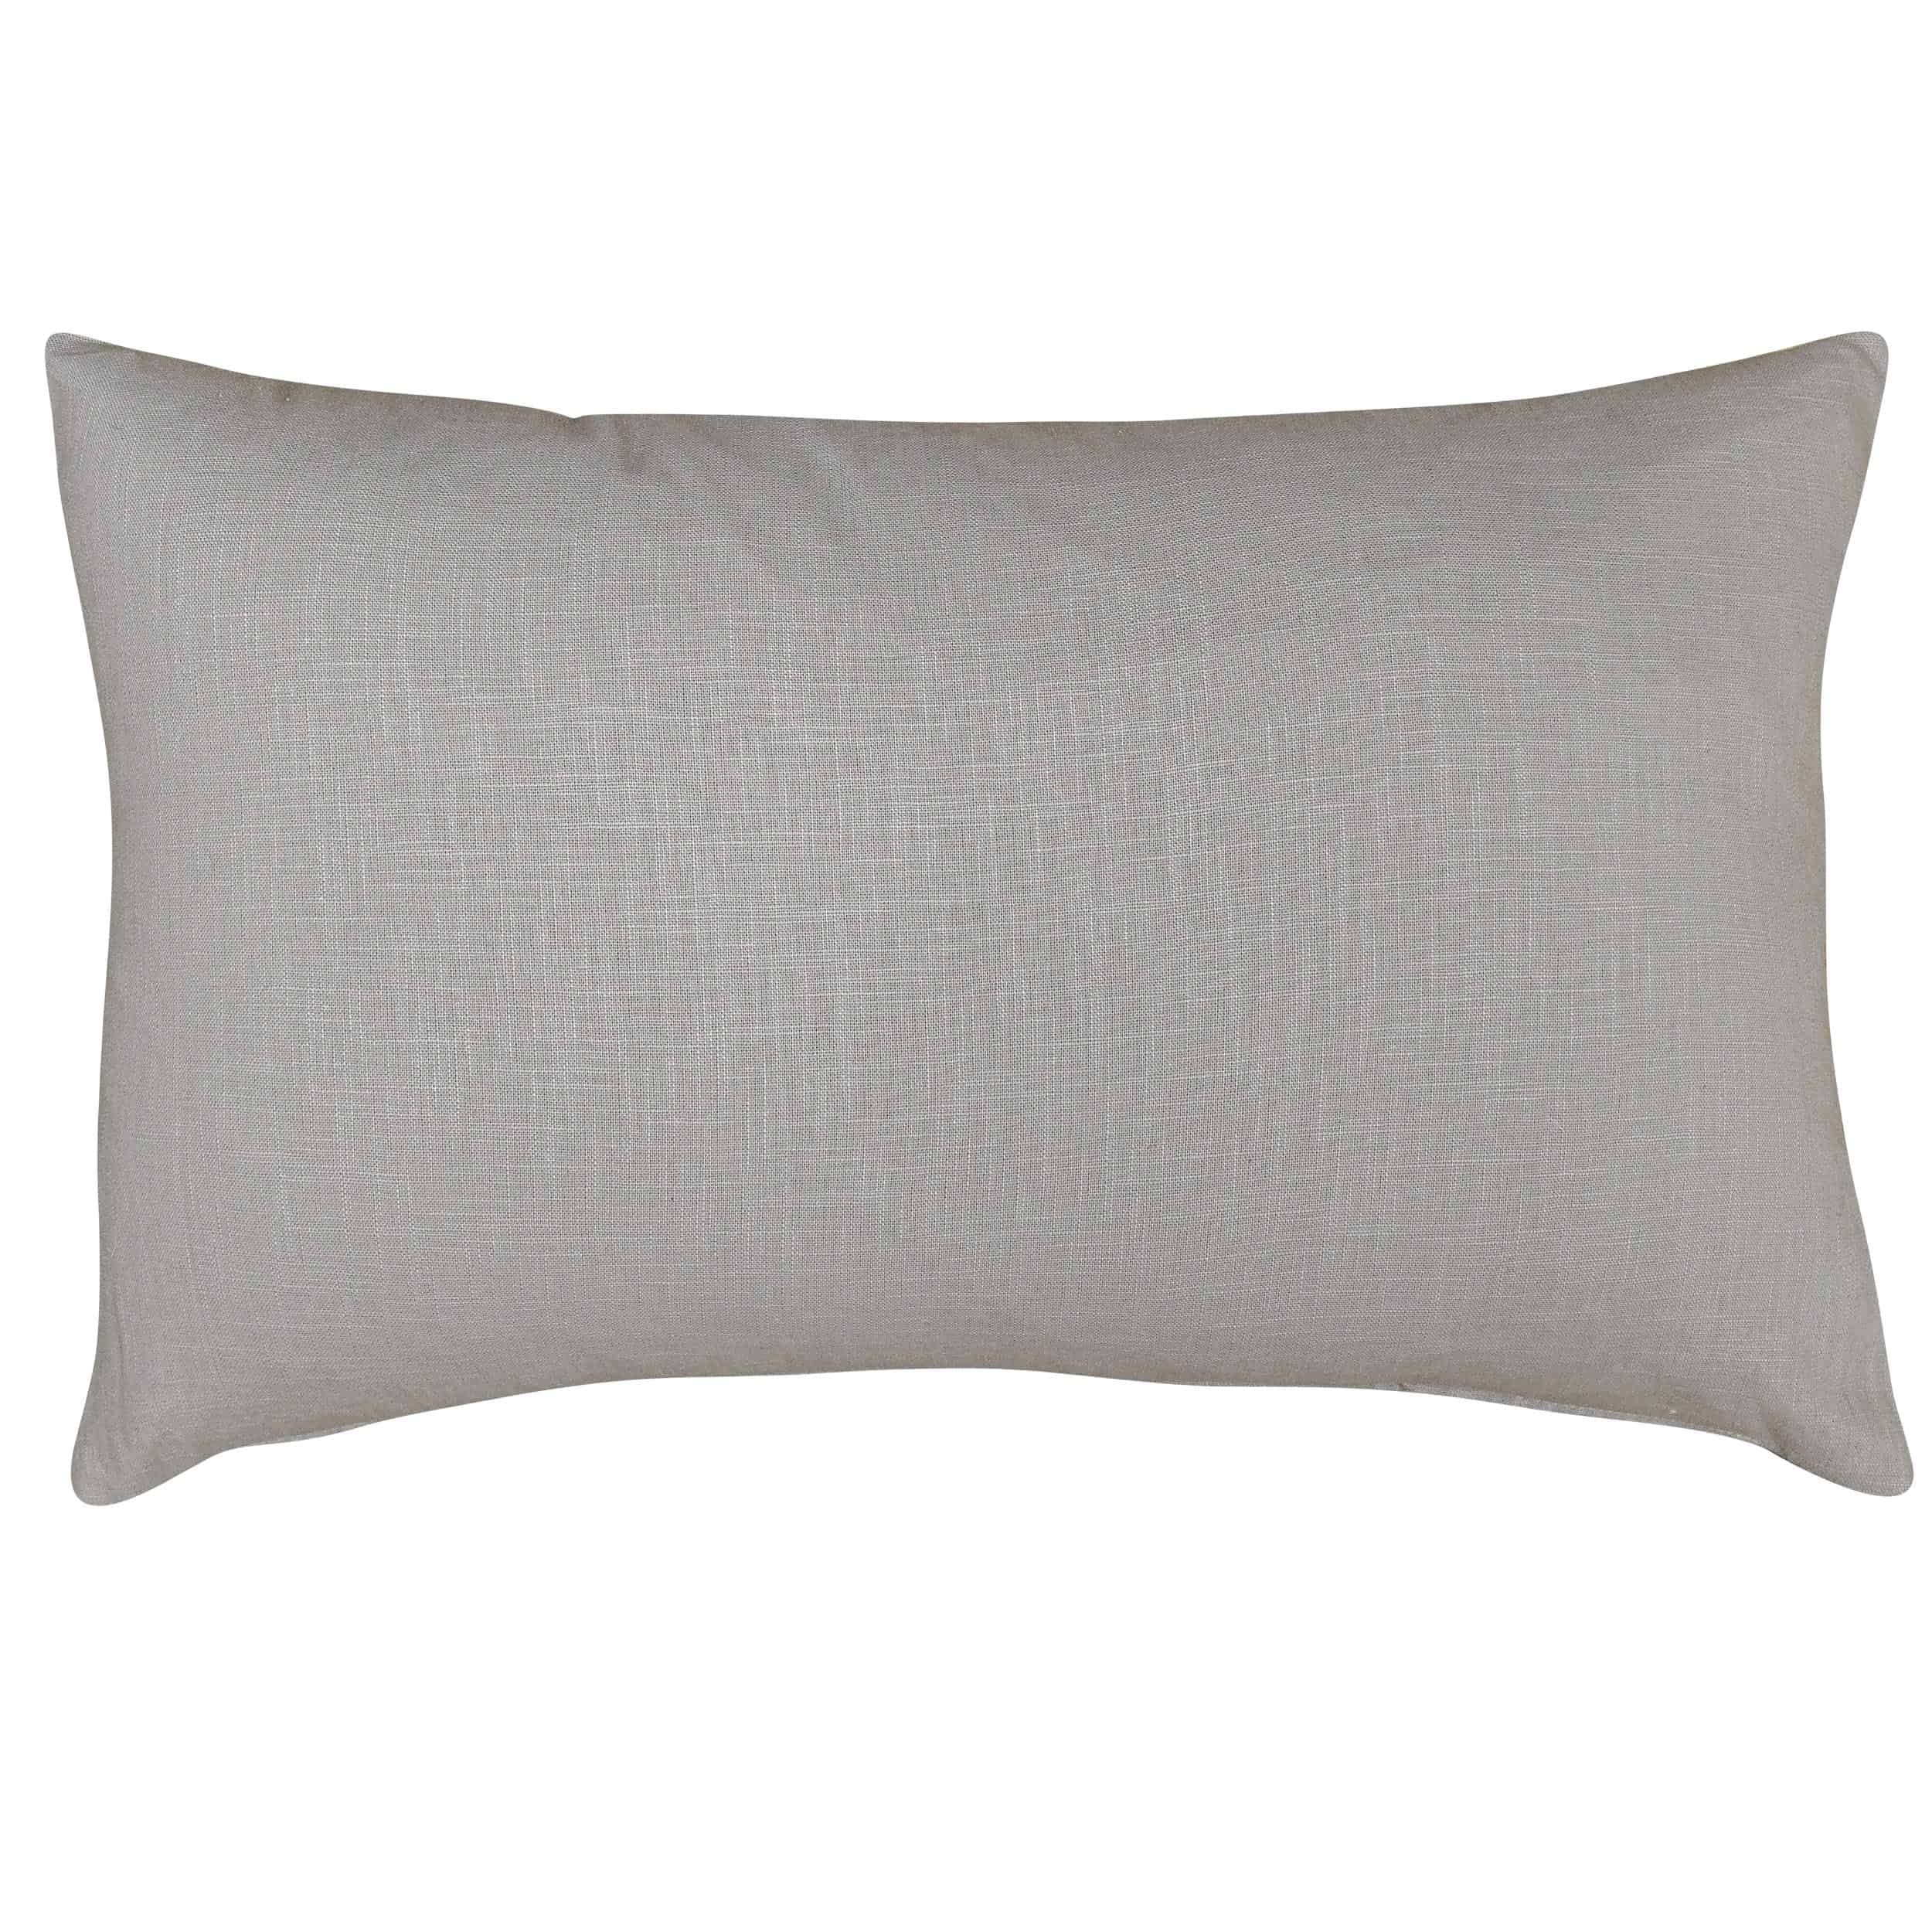 100% Linen XL Rectangular Cushion Cover in Stone Grey